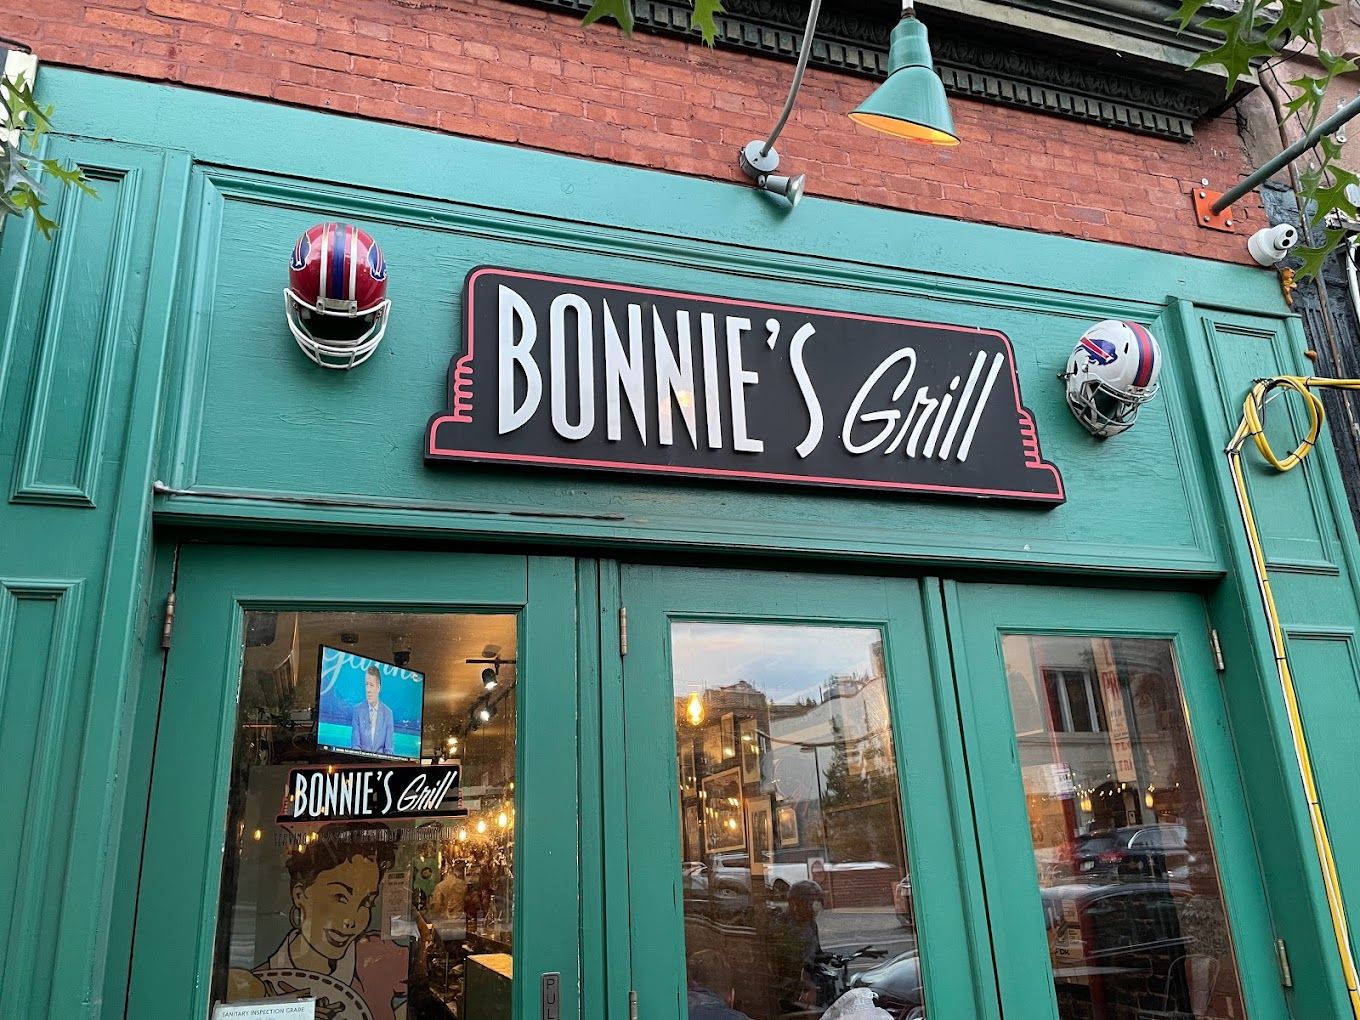 Bonnie's Grill